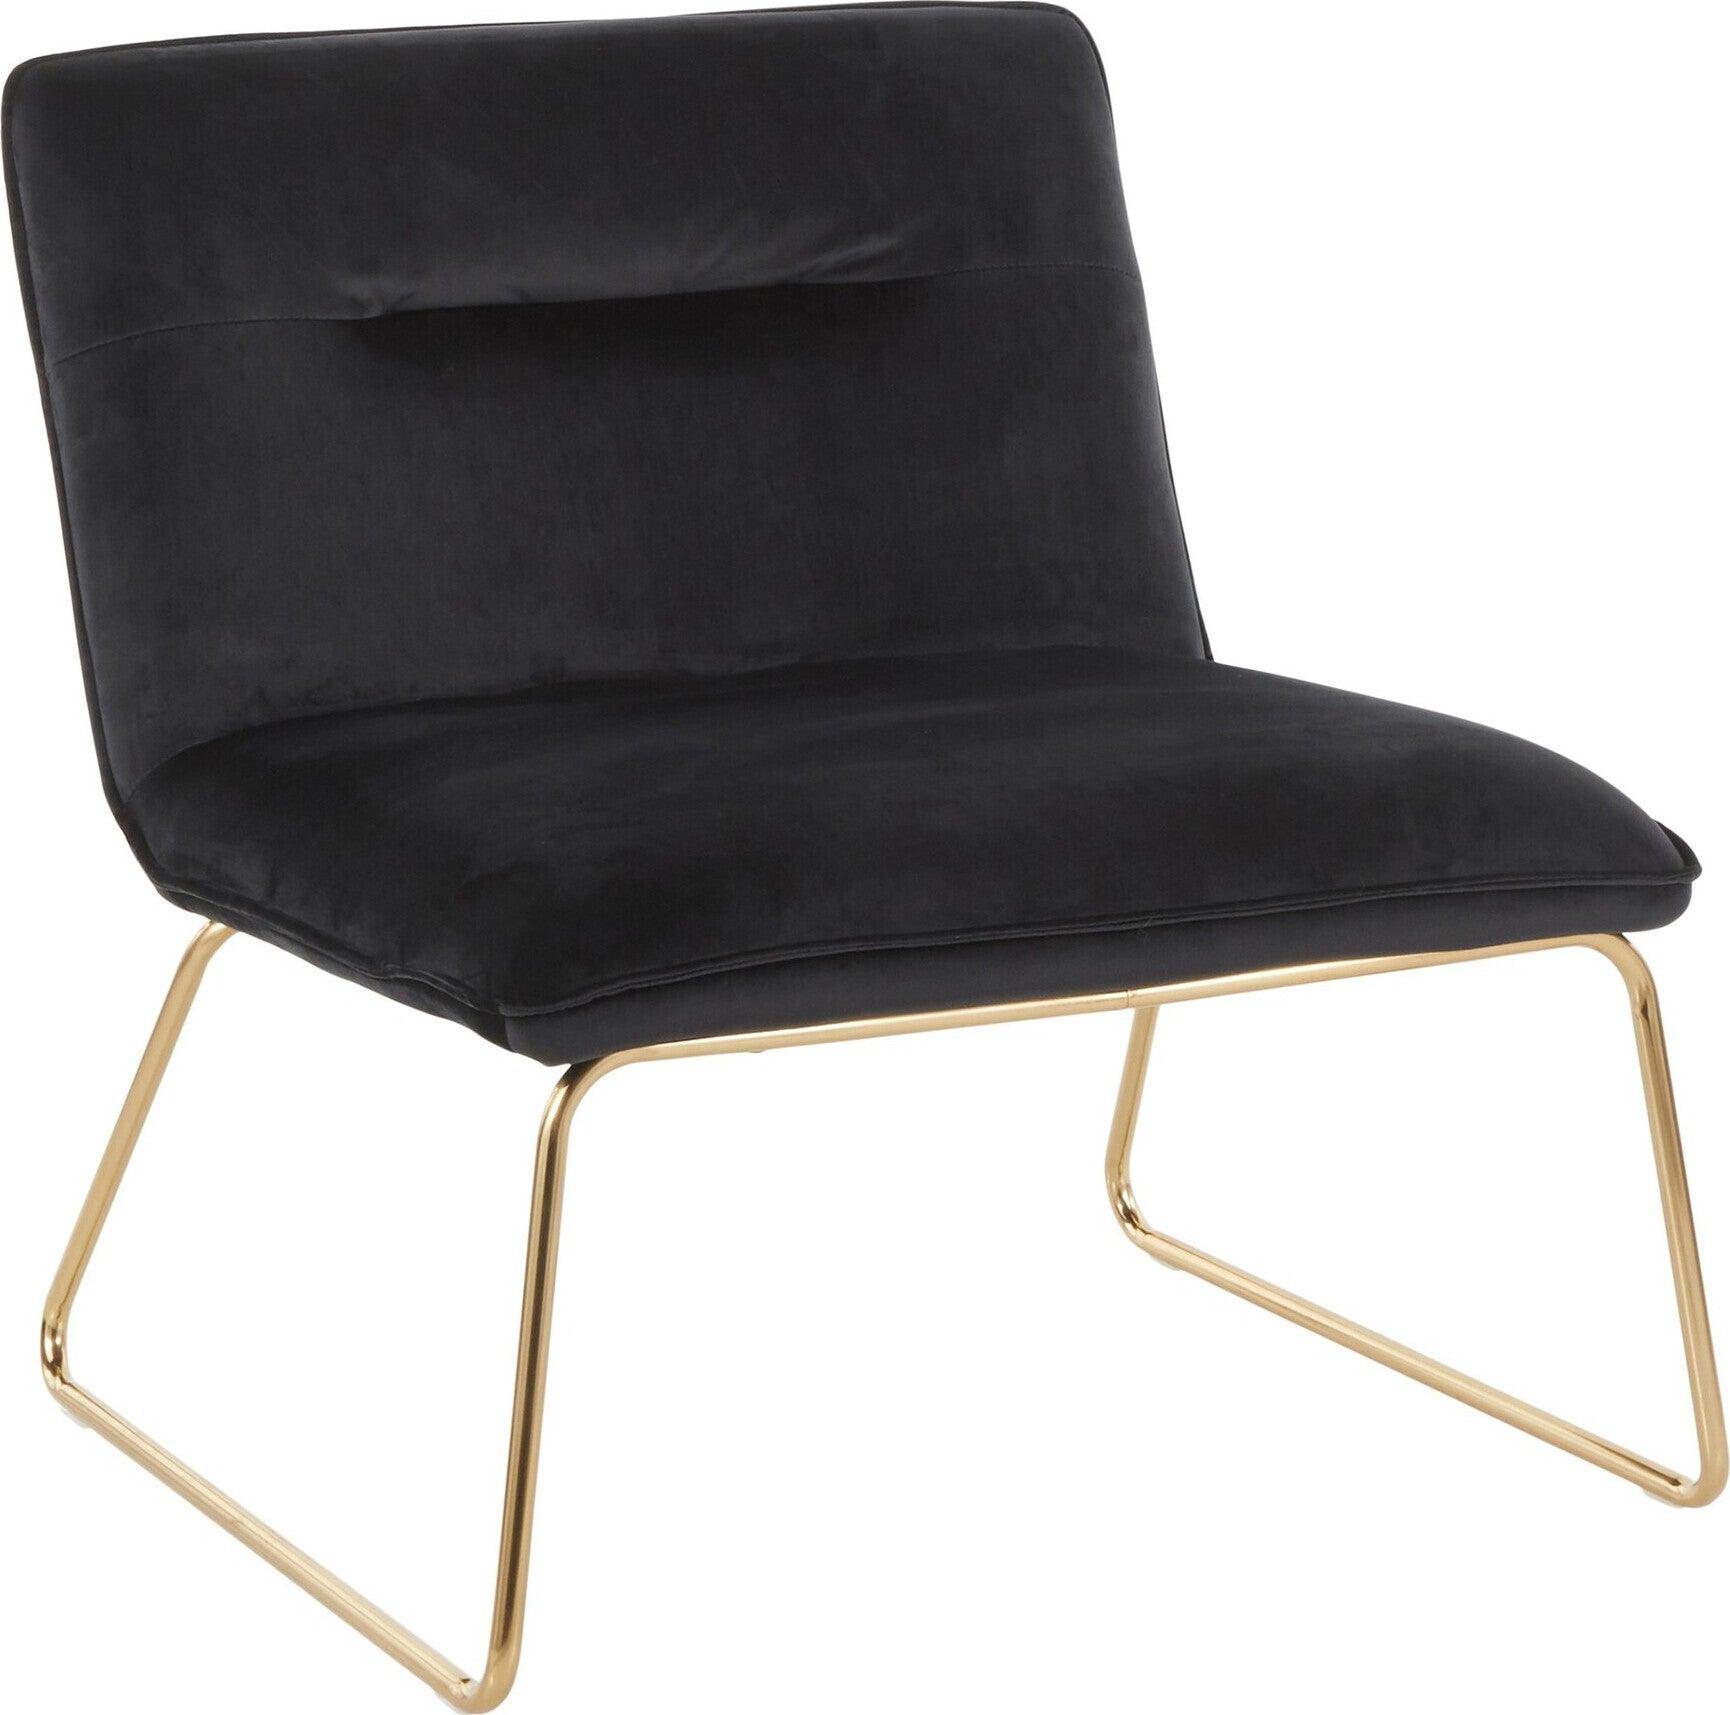 Lumisource Accent Chairs - Casper Accent Chair Gold & Black